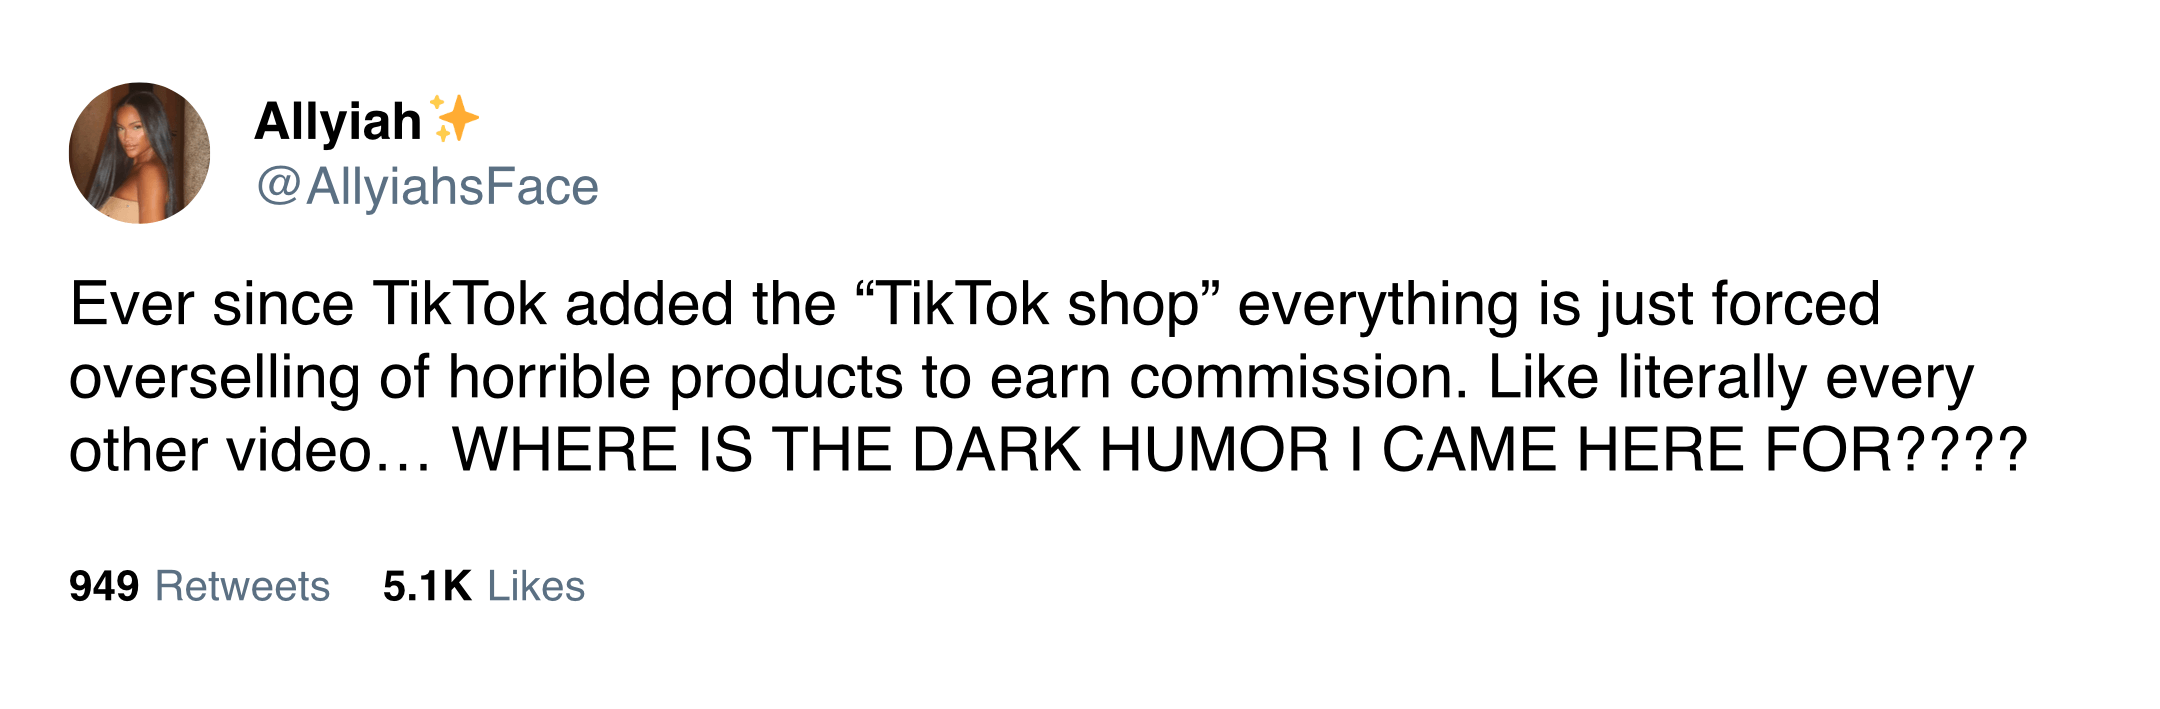 Tweet about TikTok Shop from @allyiahsface